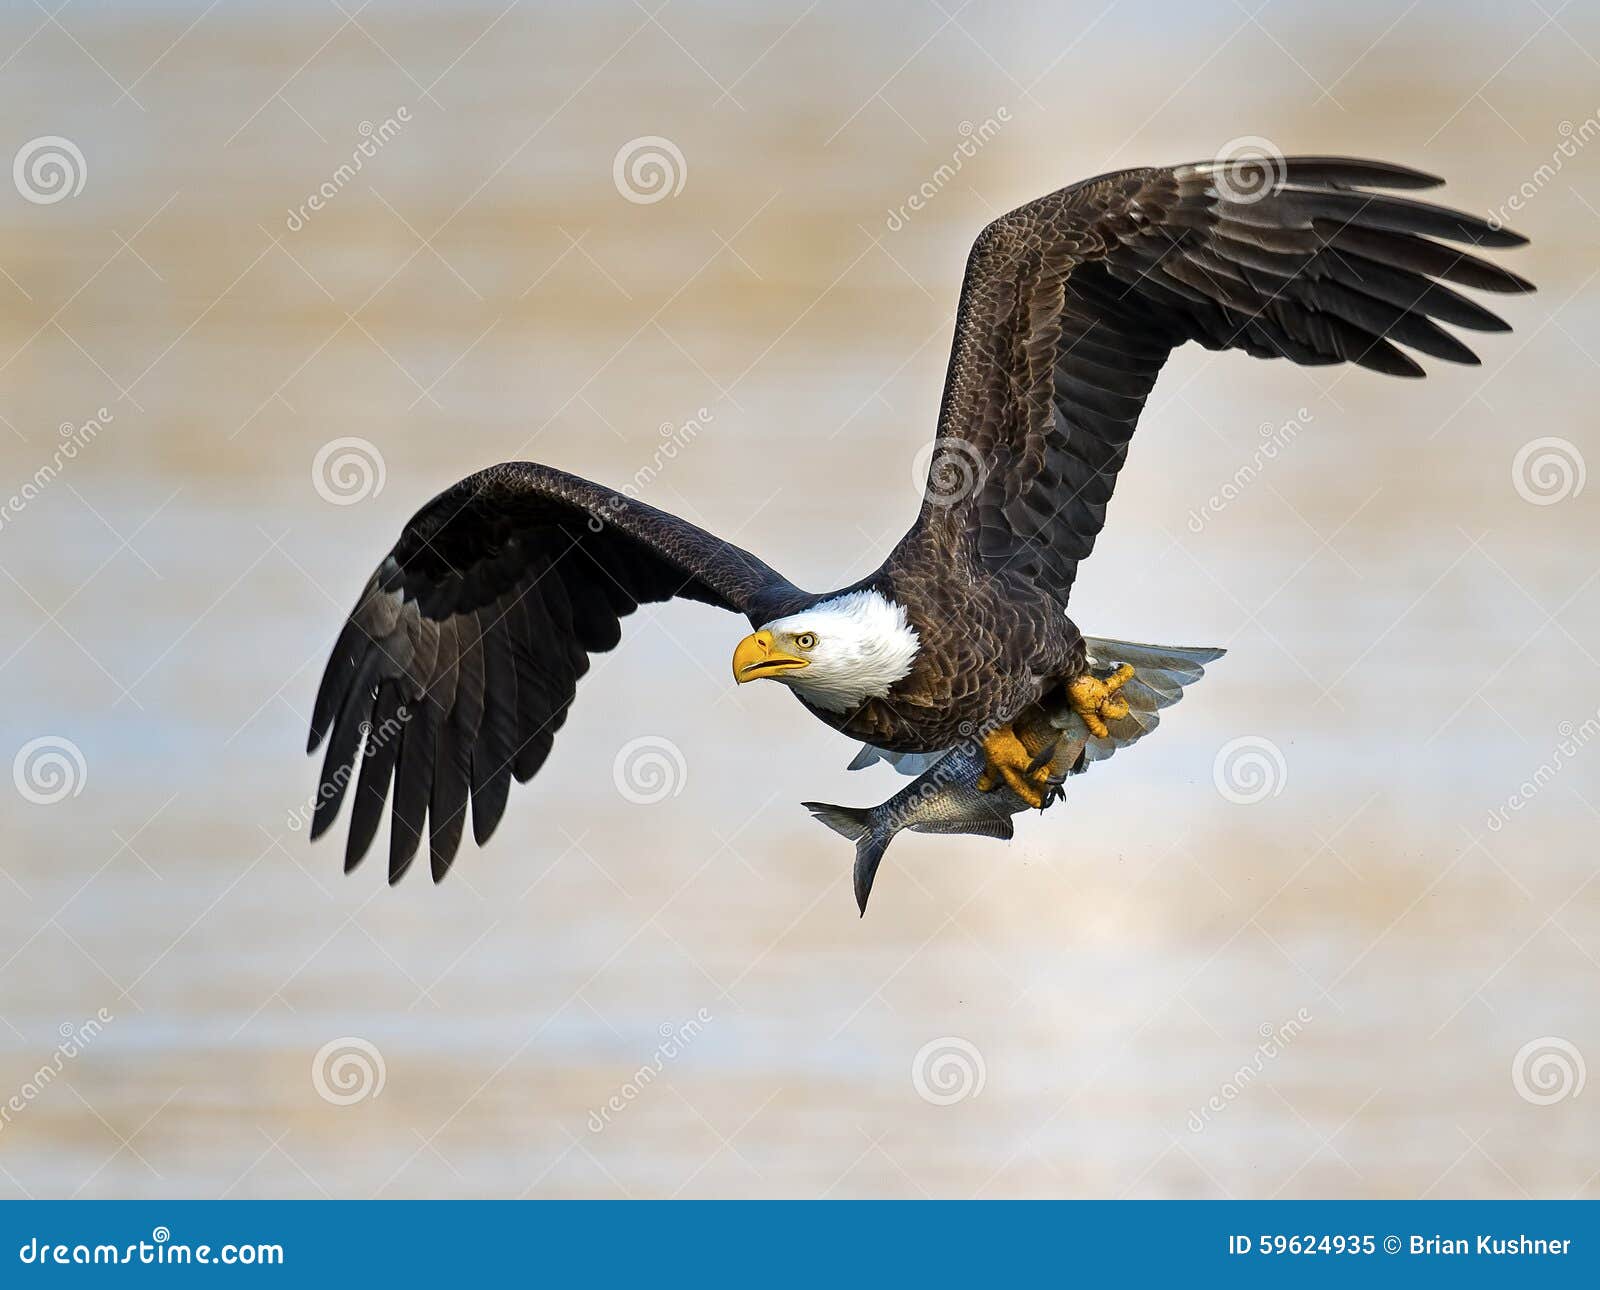 eagle talons clipart - photo #48